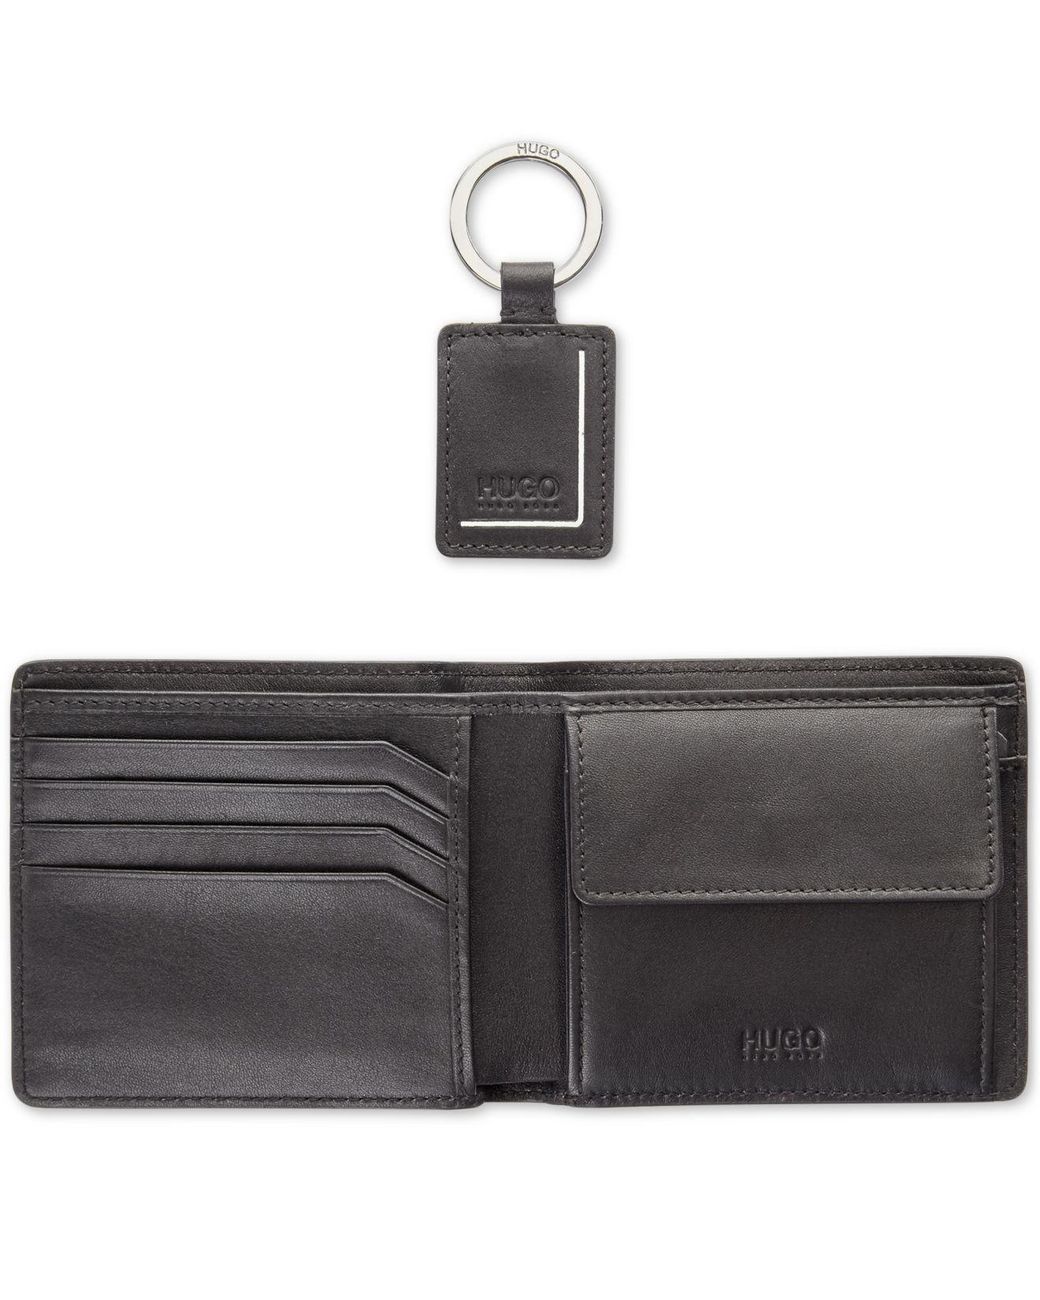 BOSS by HUGO BOSS Leather Wallet & Keychain Set in Black for Men | Lyst